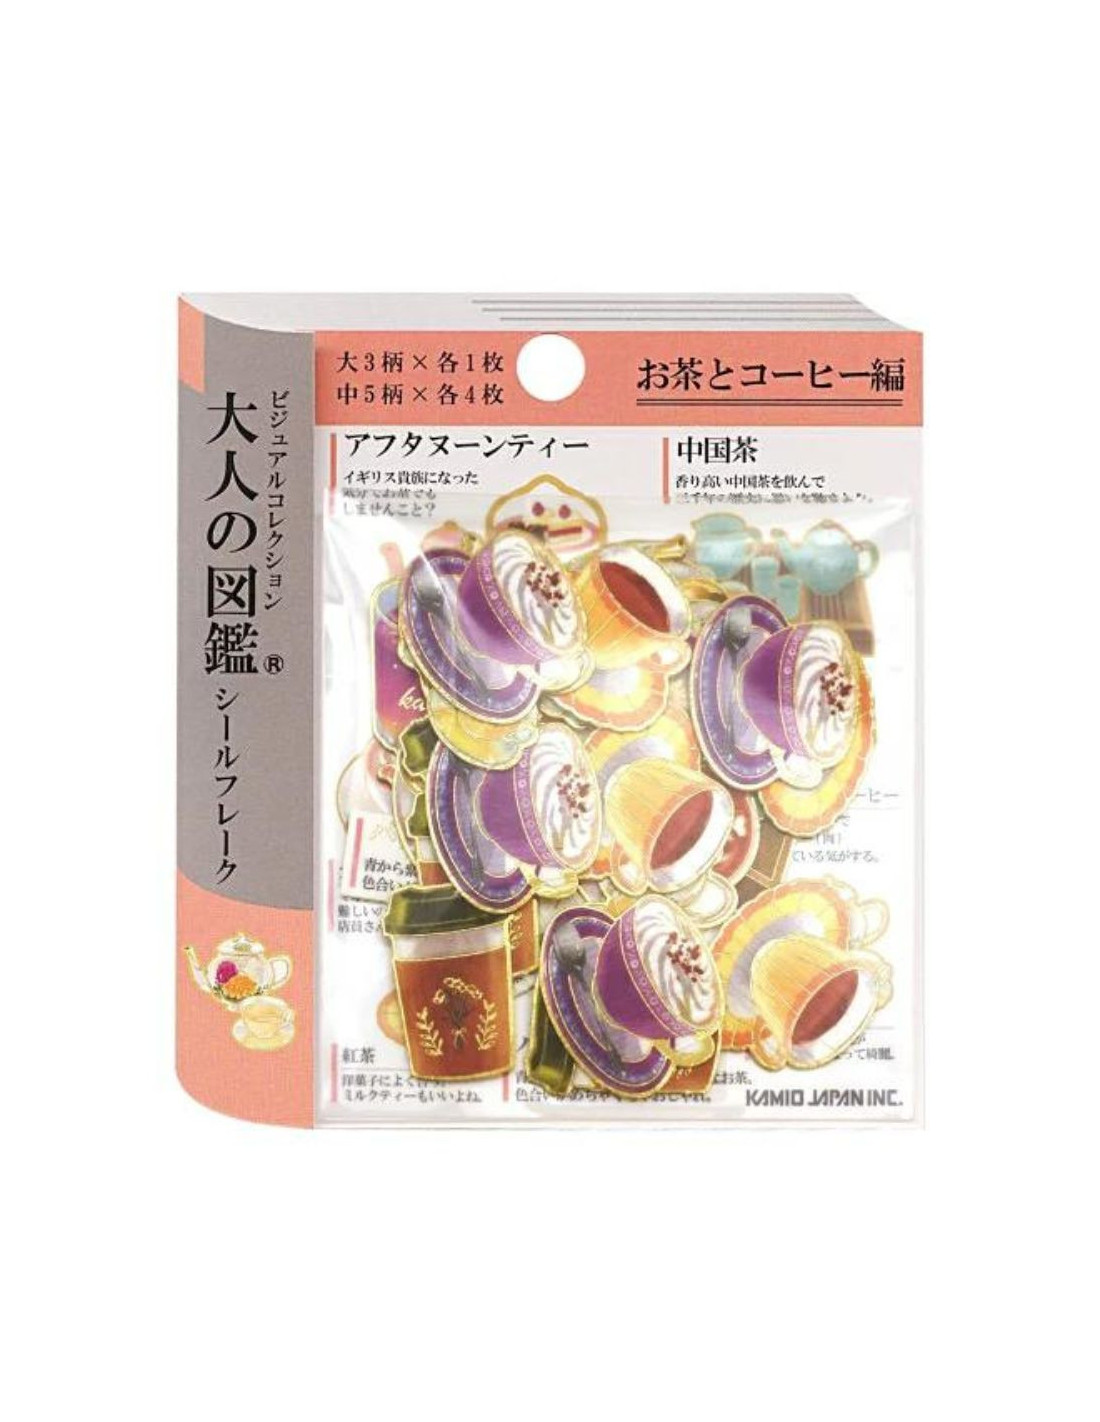 Otonano-zukan Flake Stickers - Tea and Coffee - Kamio Japan